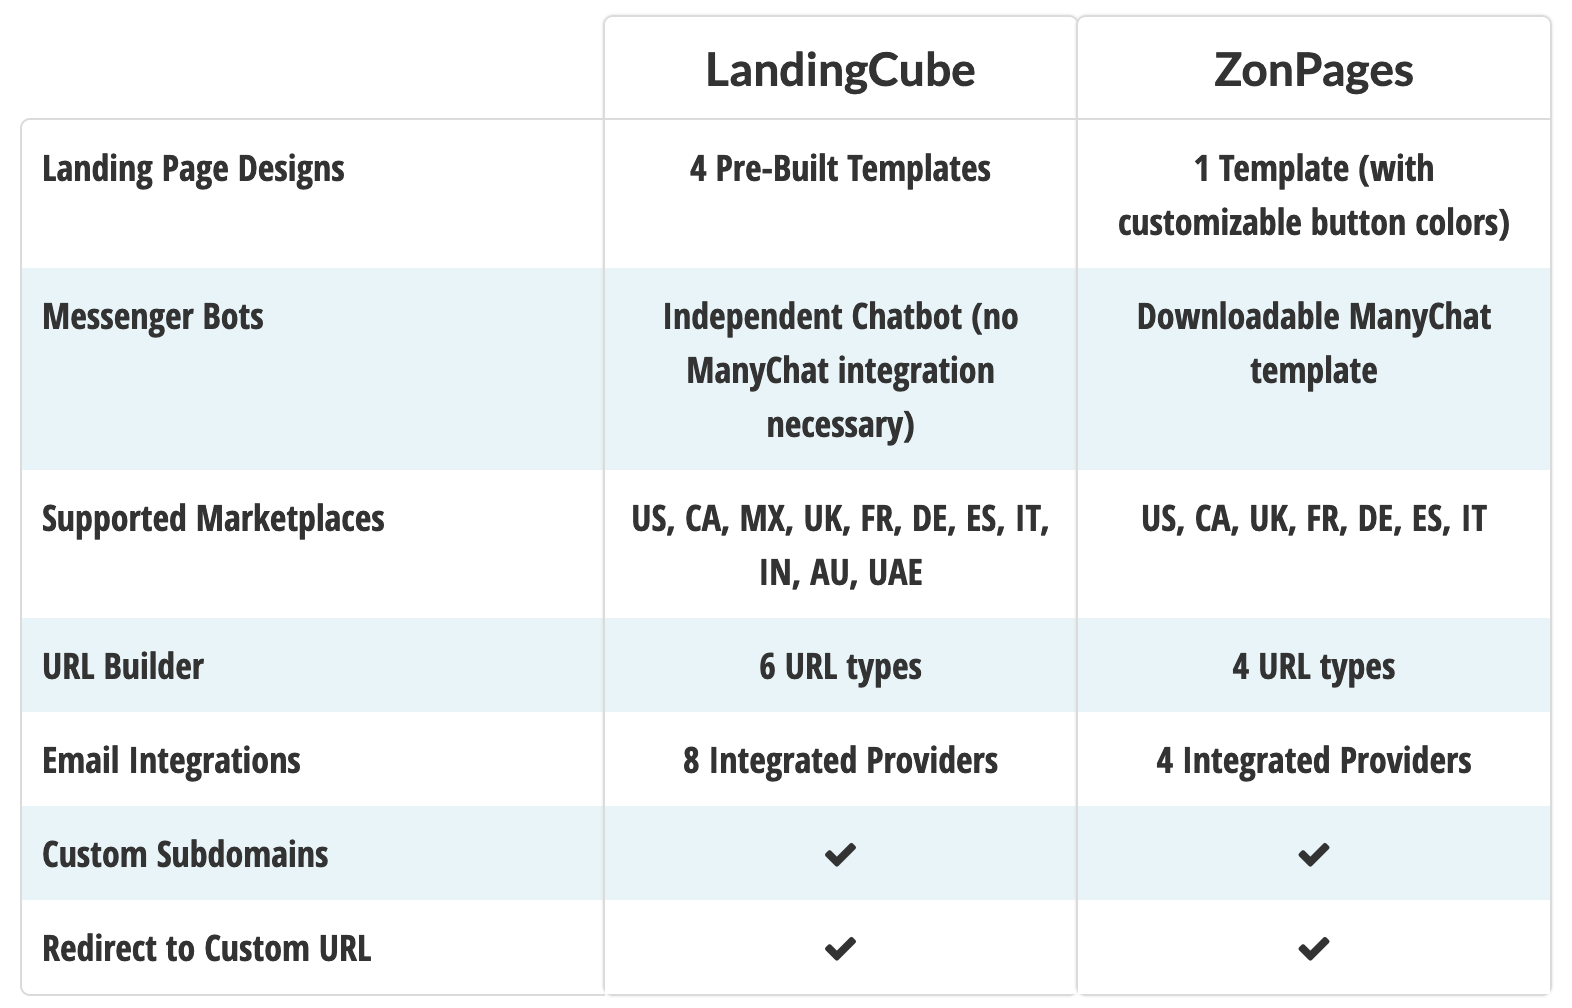 zonpages评测-zonpages8.5折优惠码 1美元免费试用一个月zonpages vs landingcube哪个才是最好的亚马逊landing page登陆页面工具？-图片4